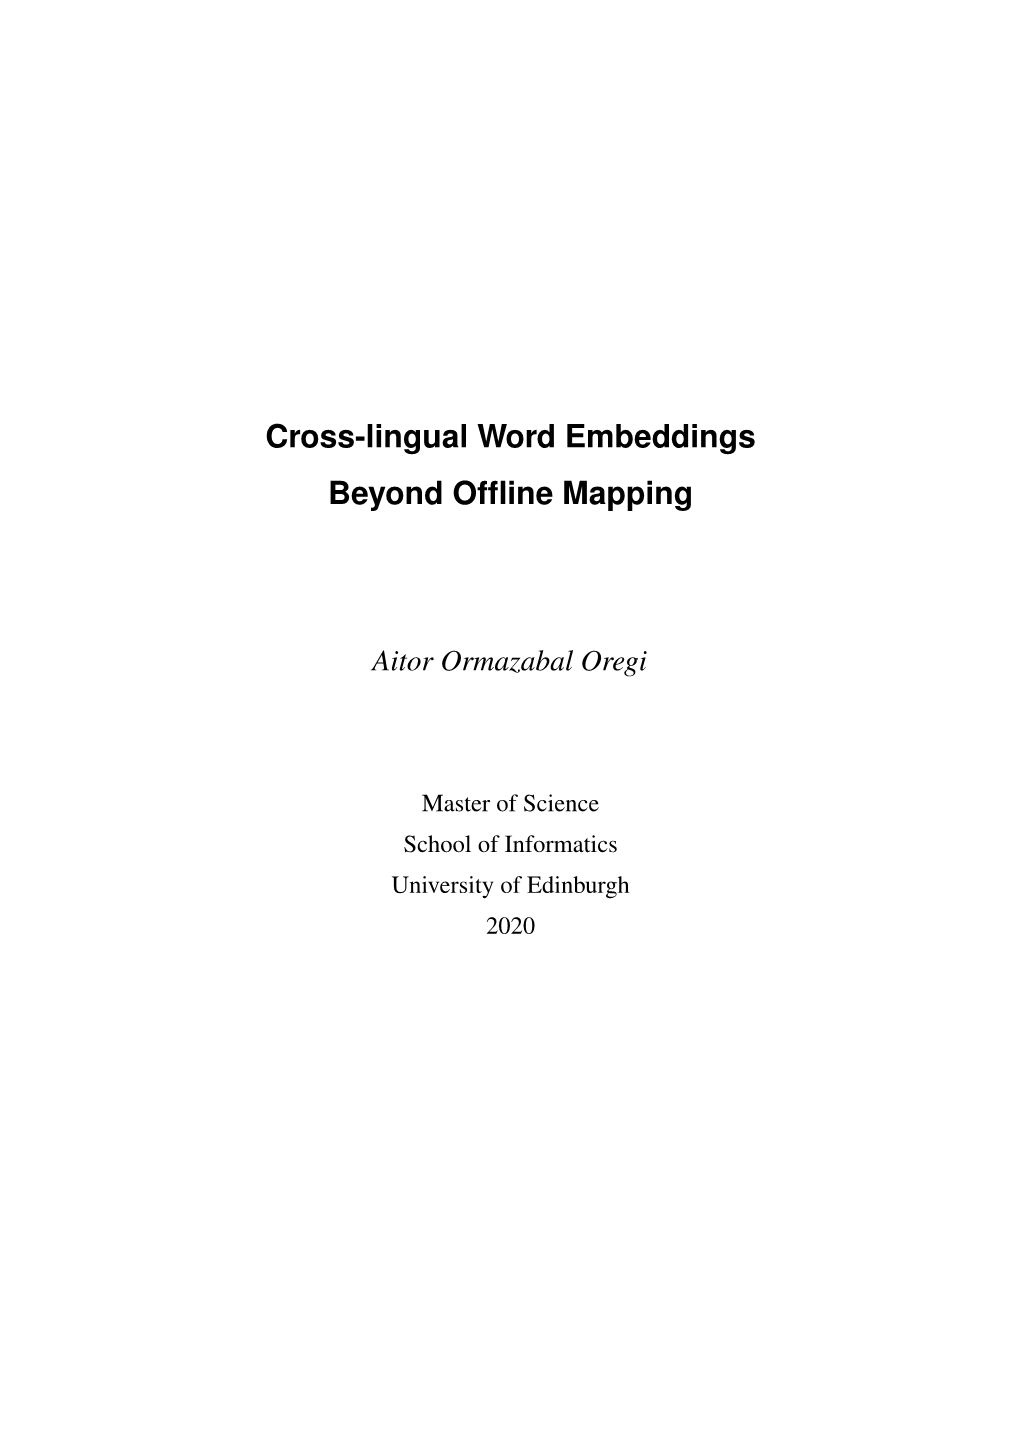 Cross-Lingual Word Embeddings Beyond Offline Mapping